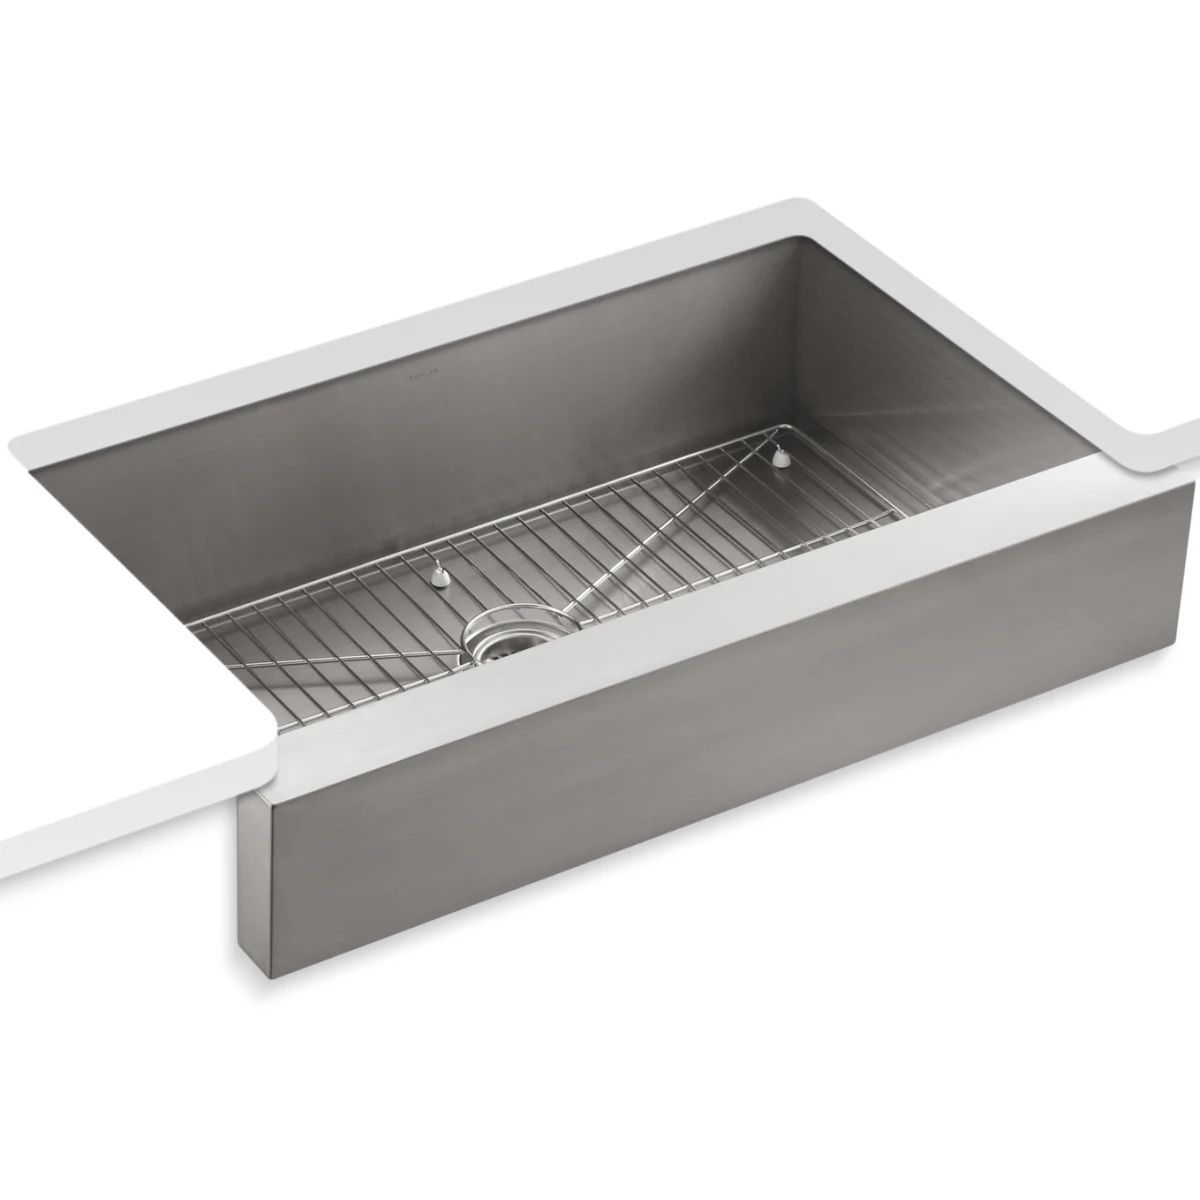 Vault 36" Single Basin Under-Mount 18-Gauge Stainless Steel Kitchen Sink with Self Trimming | Build.com, Inc.